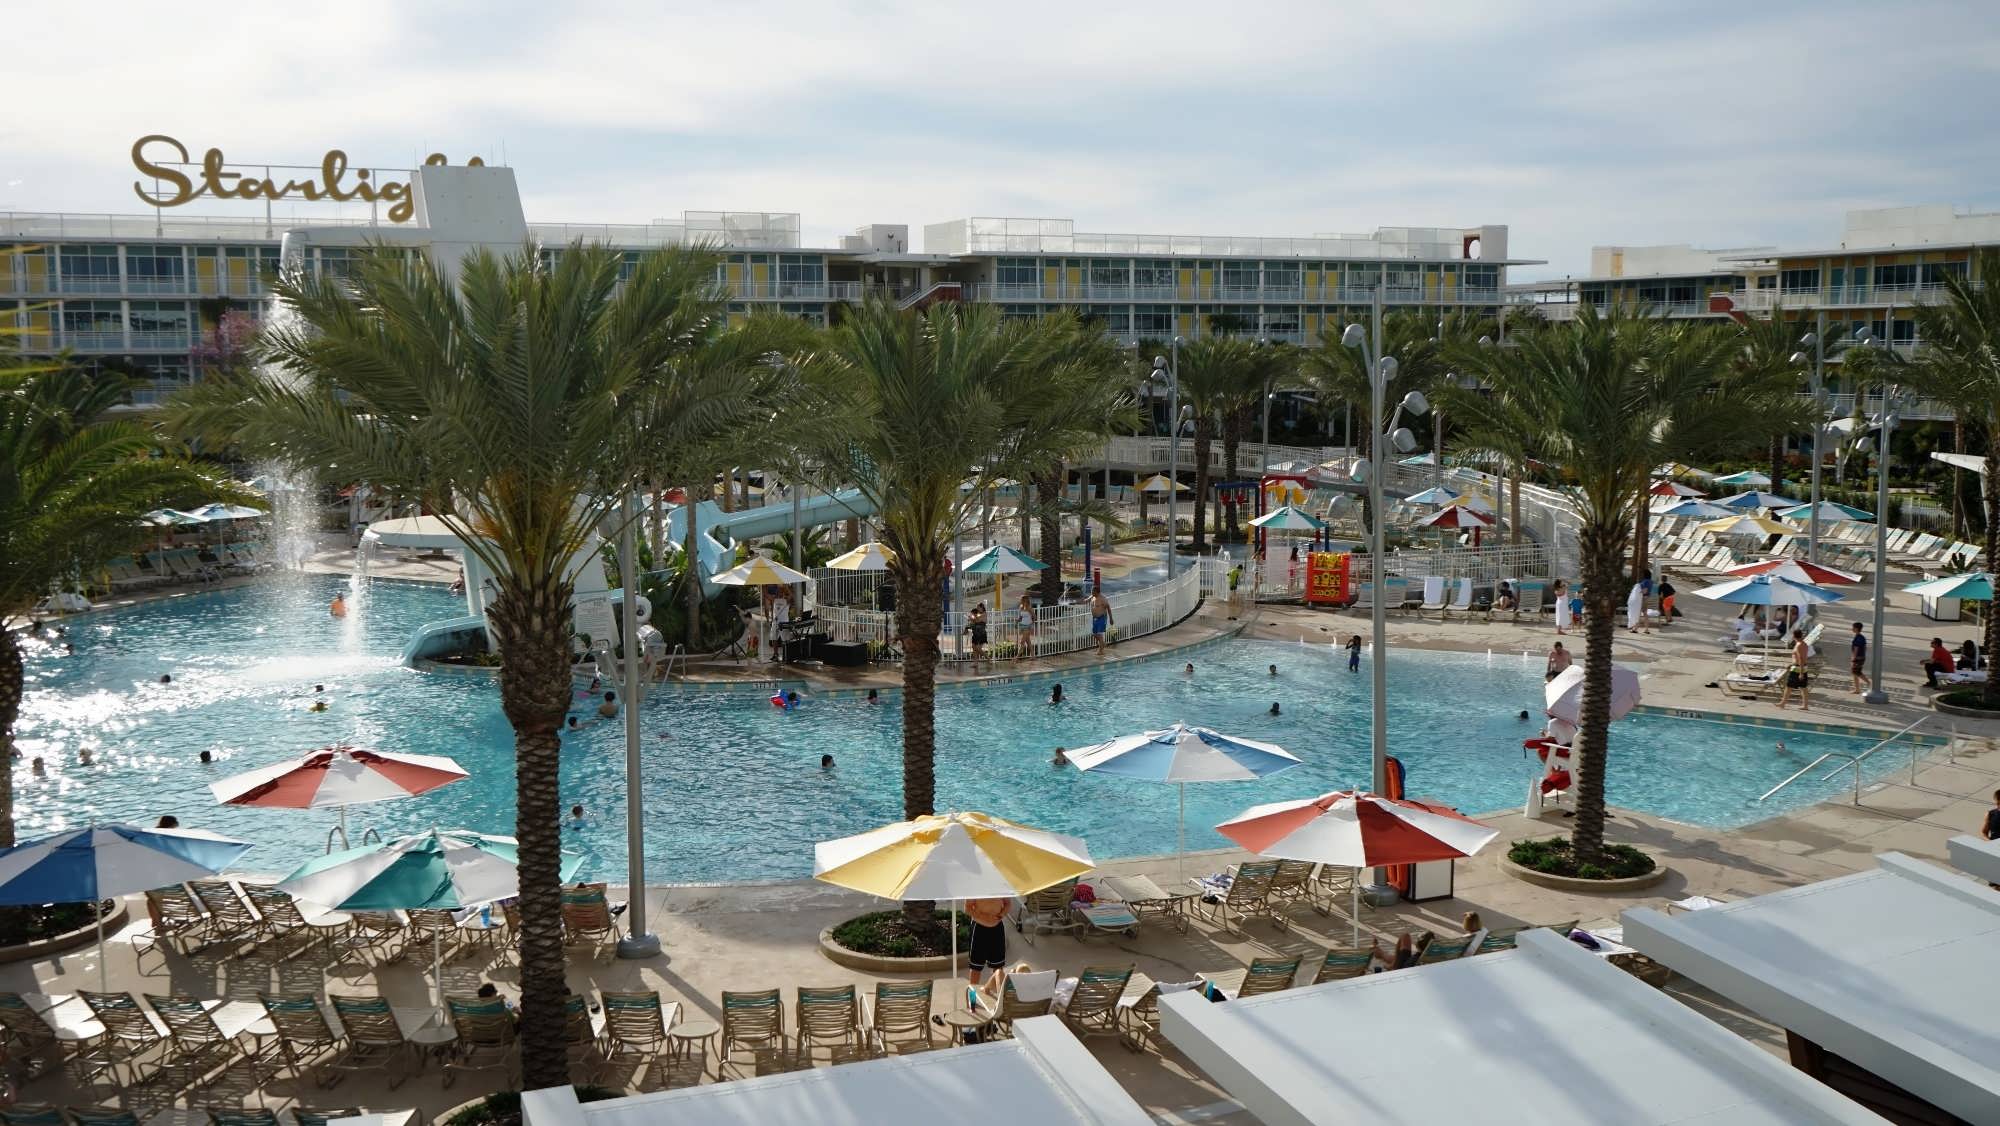 Cabana Bay Beach Resort: The thrills of staying at Universal's newest